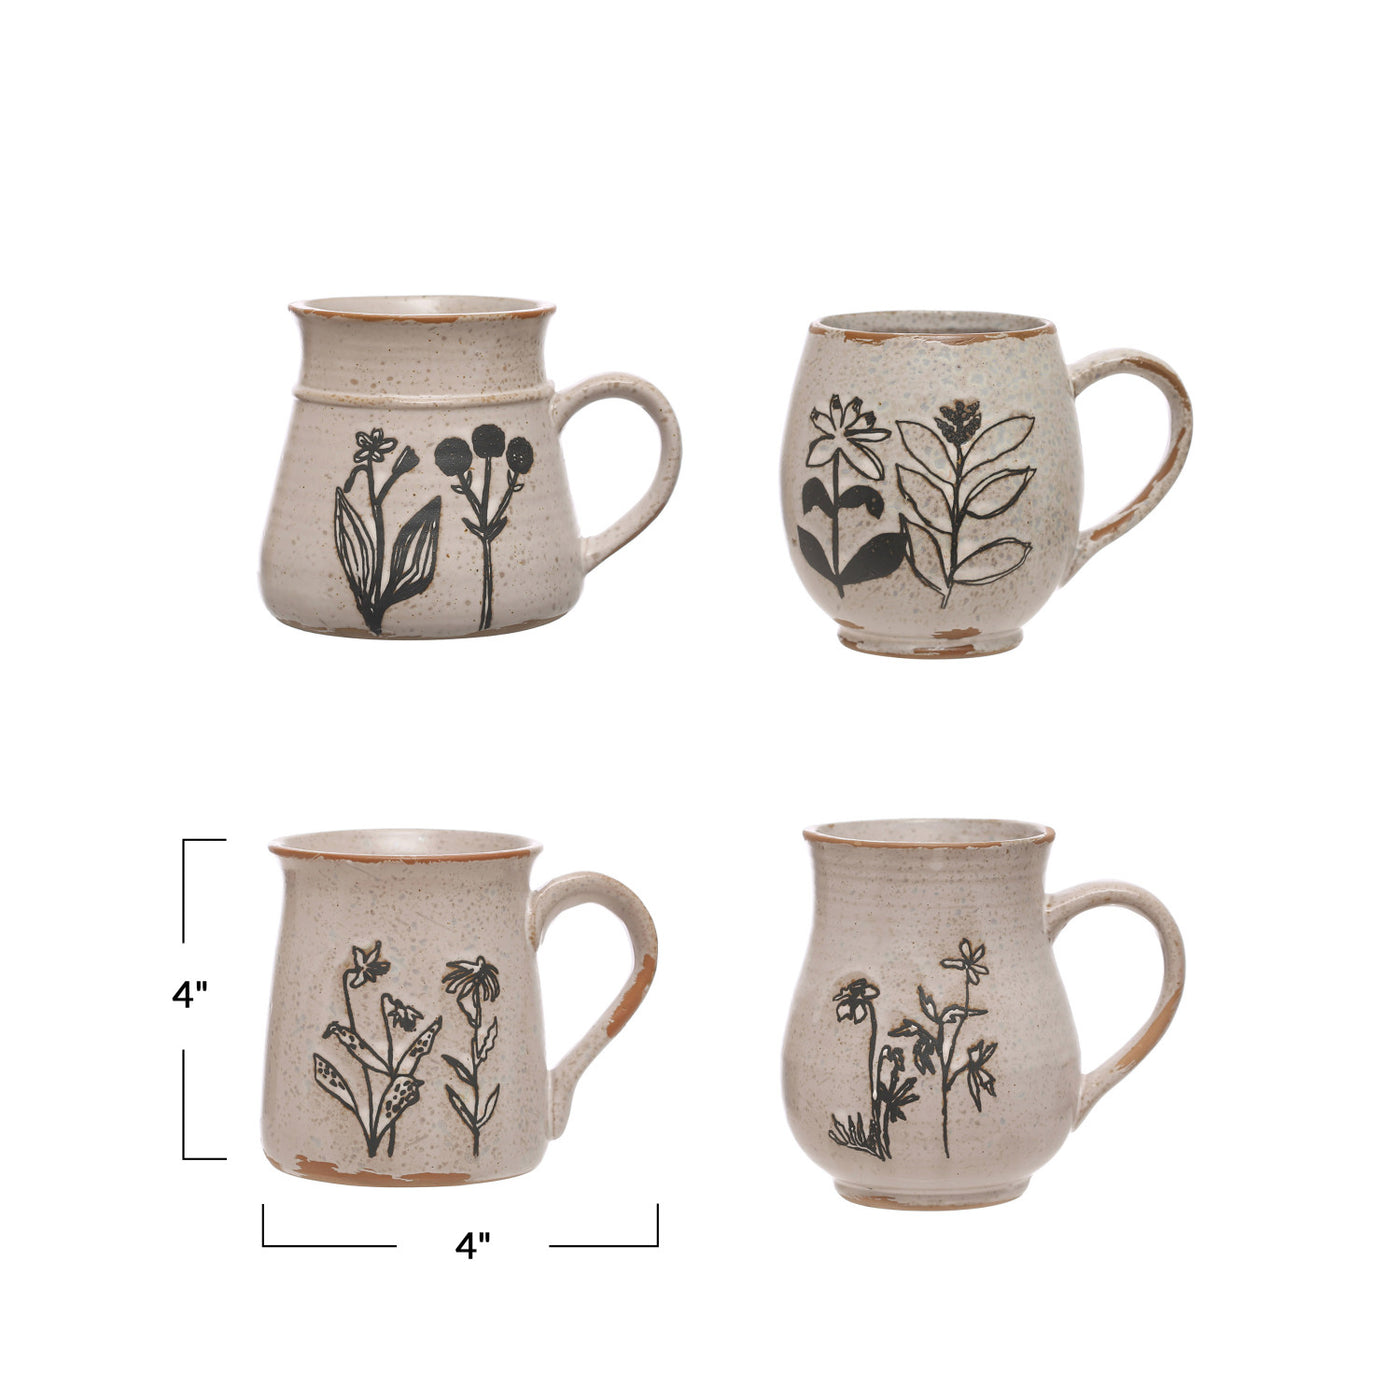 Debossed Stoneware Mug w/ Flowers